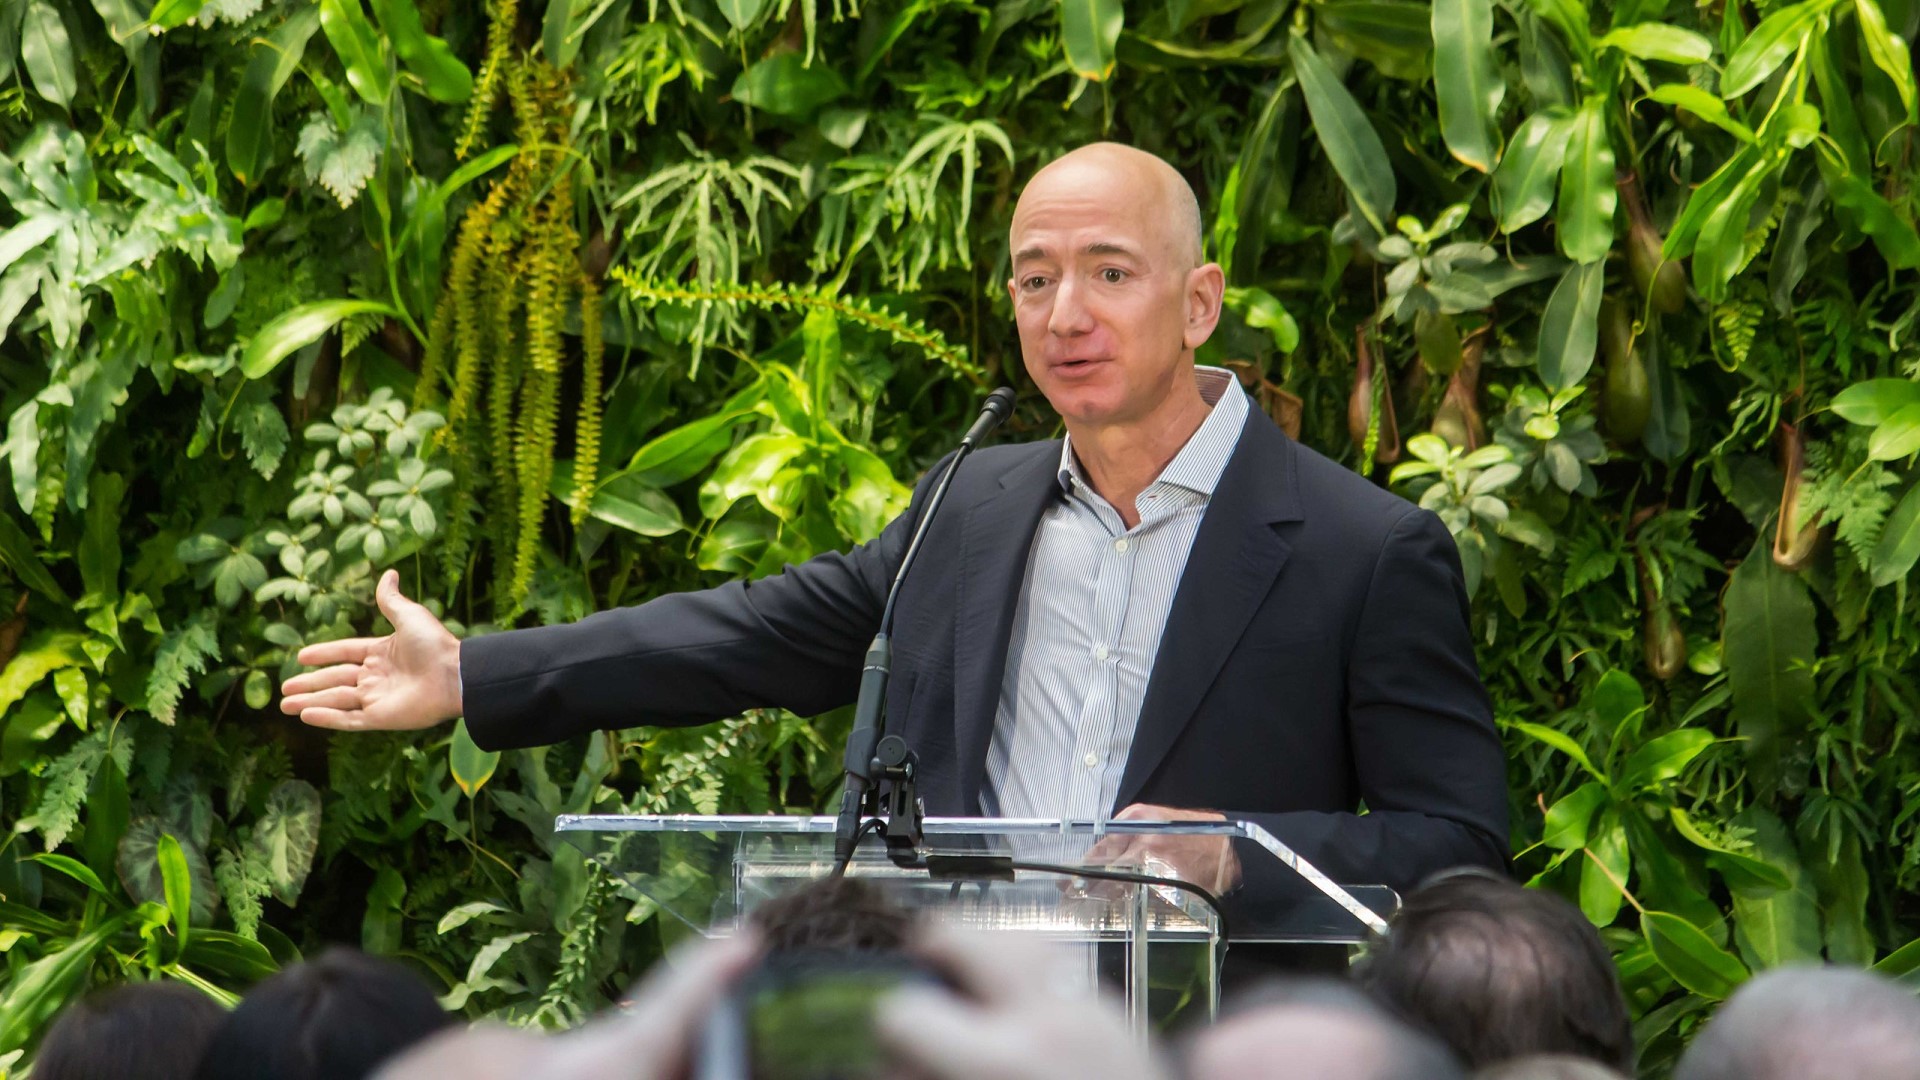 Jeff Bezos ขายหุ้น Amazon ครั้งที่ 3 ในเดือนนี้ ในมูลค่าประมาณ 72,300 ล้านบาท